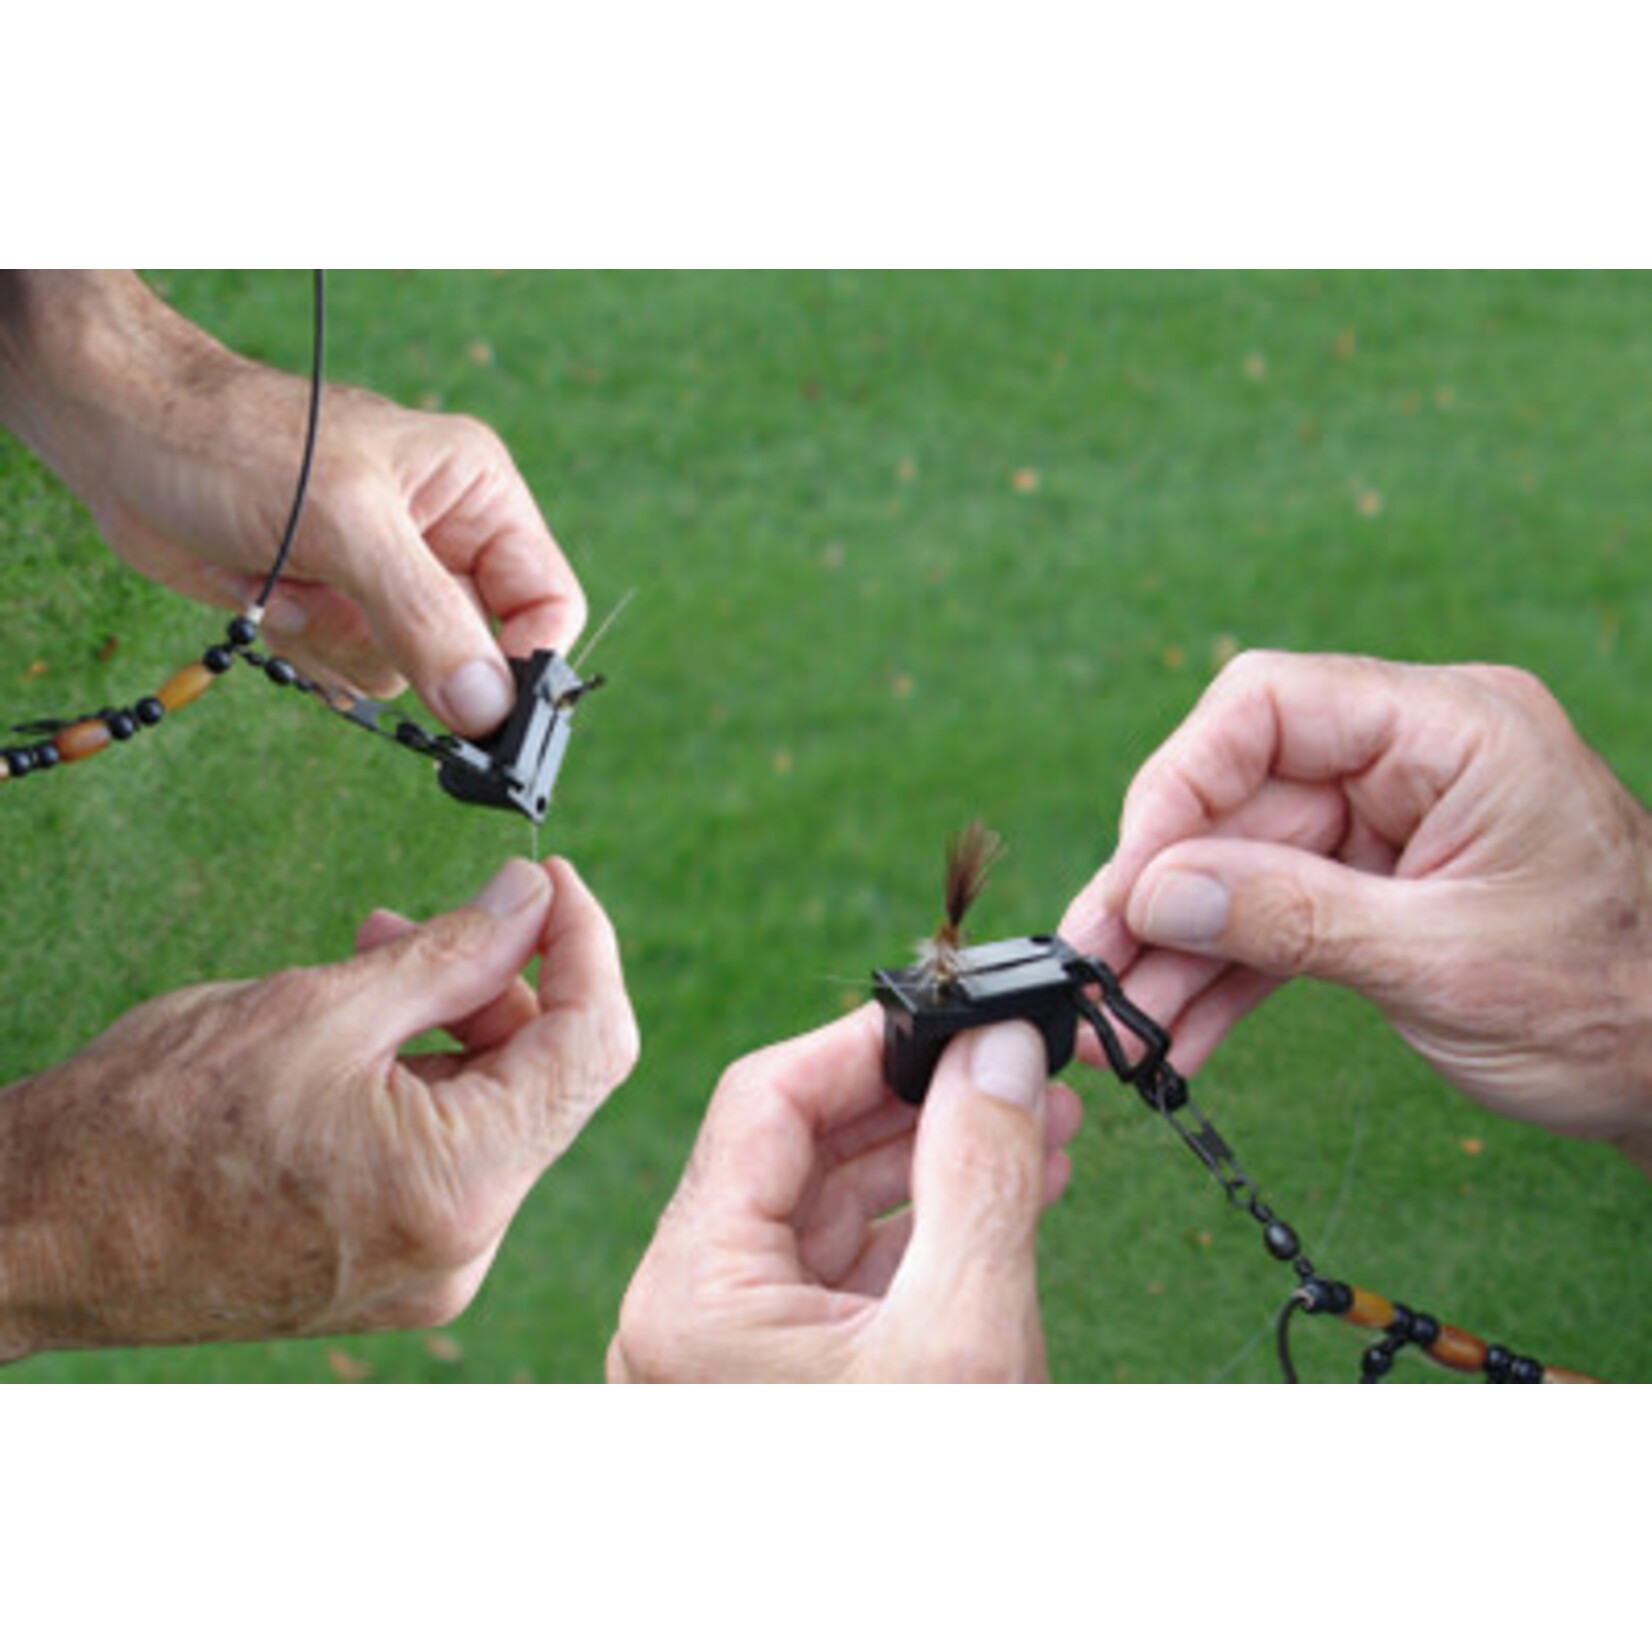  RiToEasysports Magnetic Fly Threader Fishing Line Threader  Magnetic Tippet Threader for Fly Fishing : Sports & Outdoors